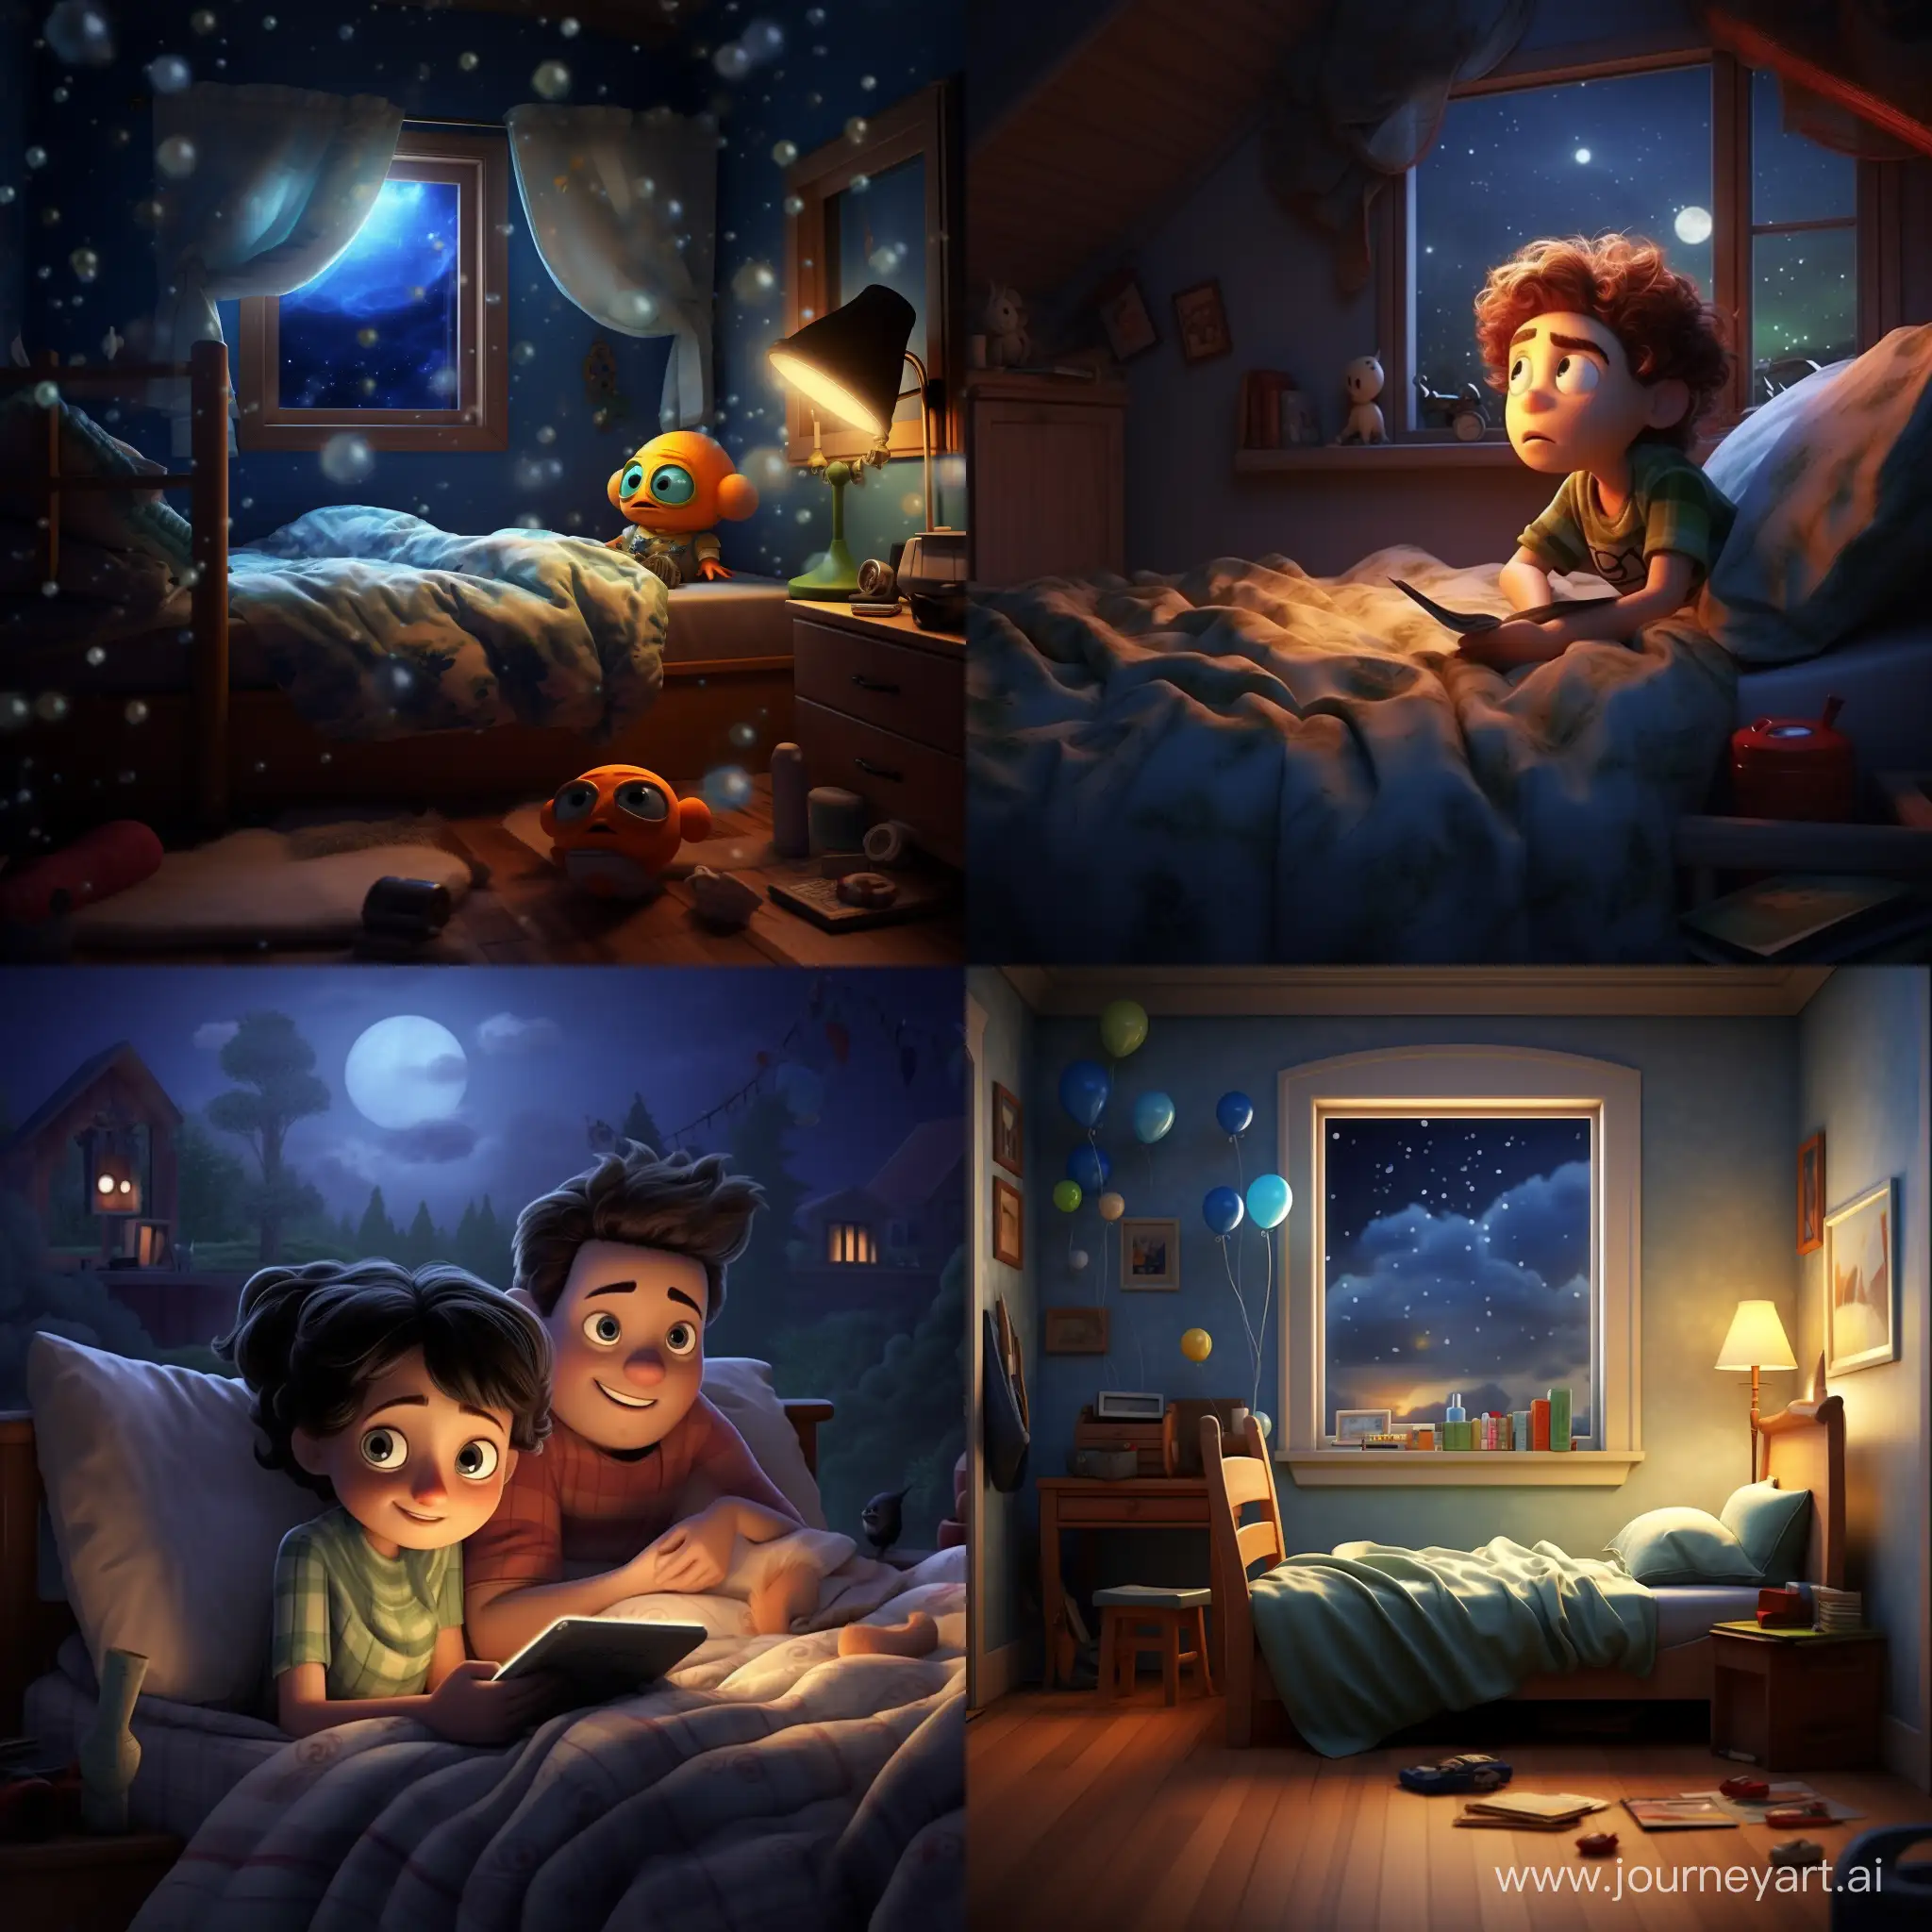 Enchanting-Night-in-Pixar-Style